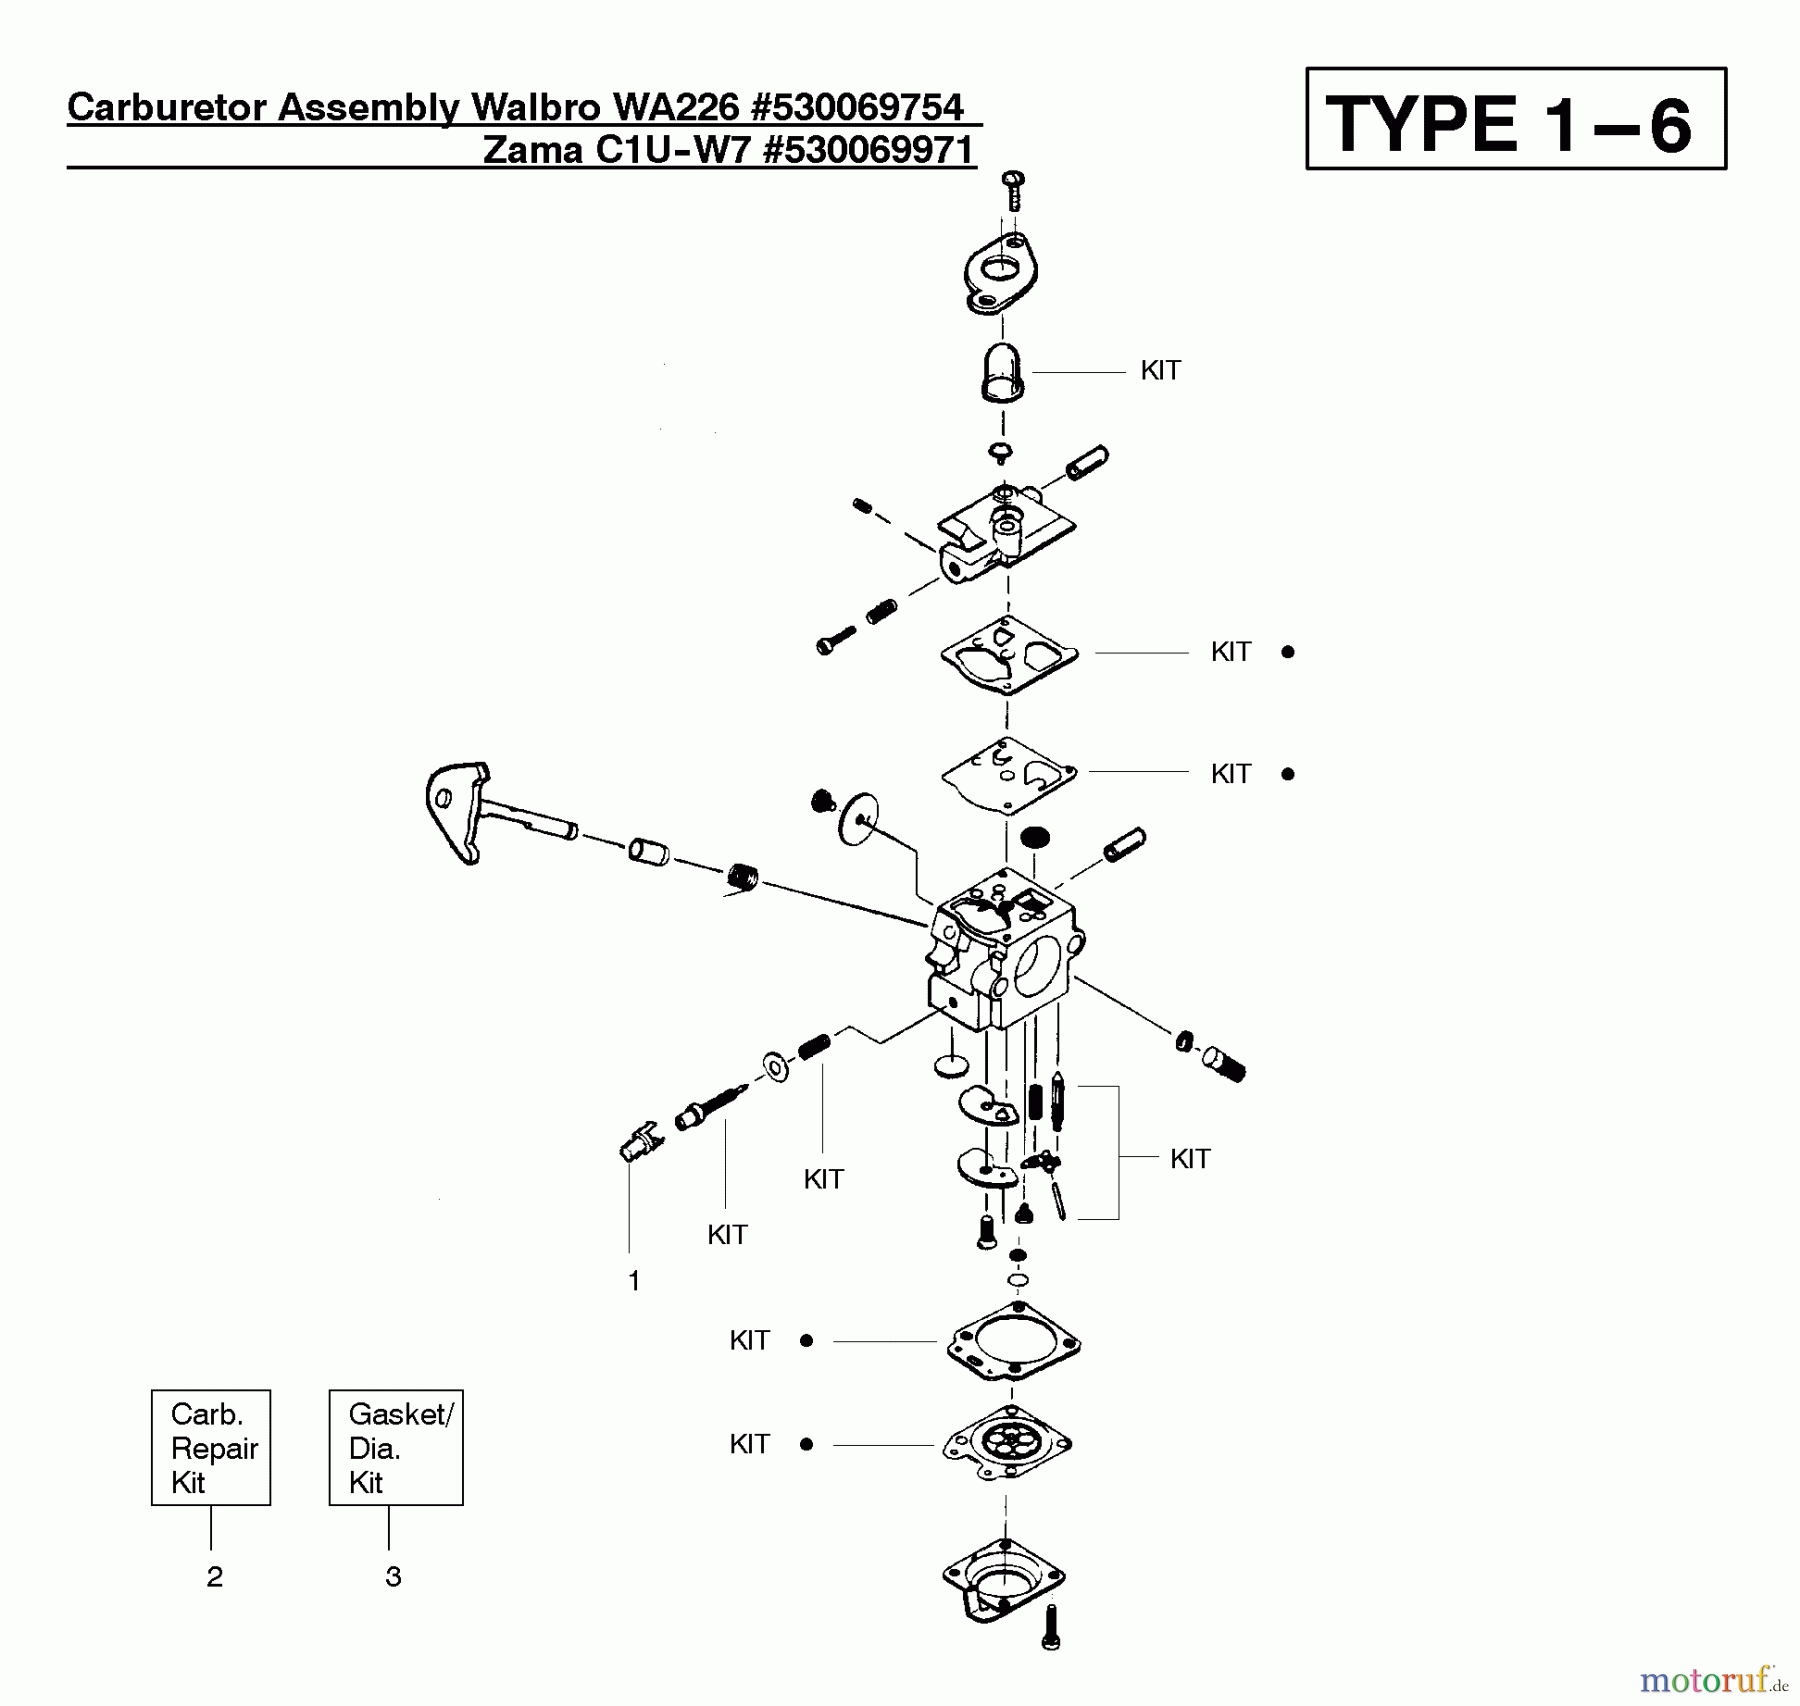  Poulan / Weed Eater Motorsensen, Trimmer XT600 (Type 2) - Weed Eater String Trimmer Carburetor Assembly (WT226) 530069754, (Zama C1U-W7) 530069971